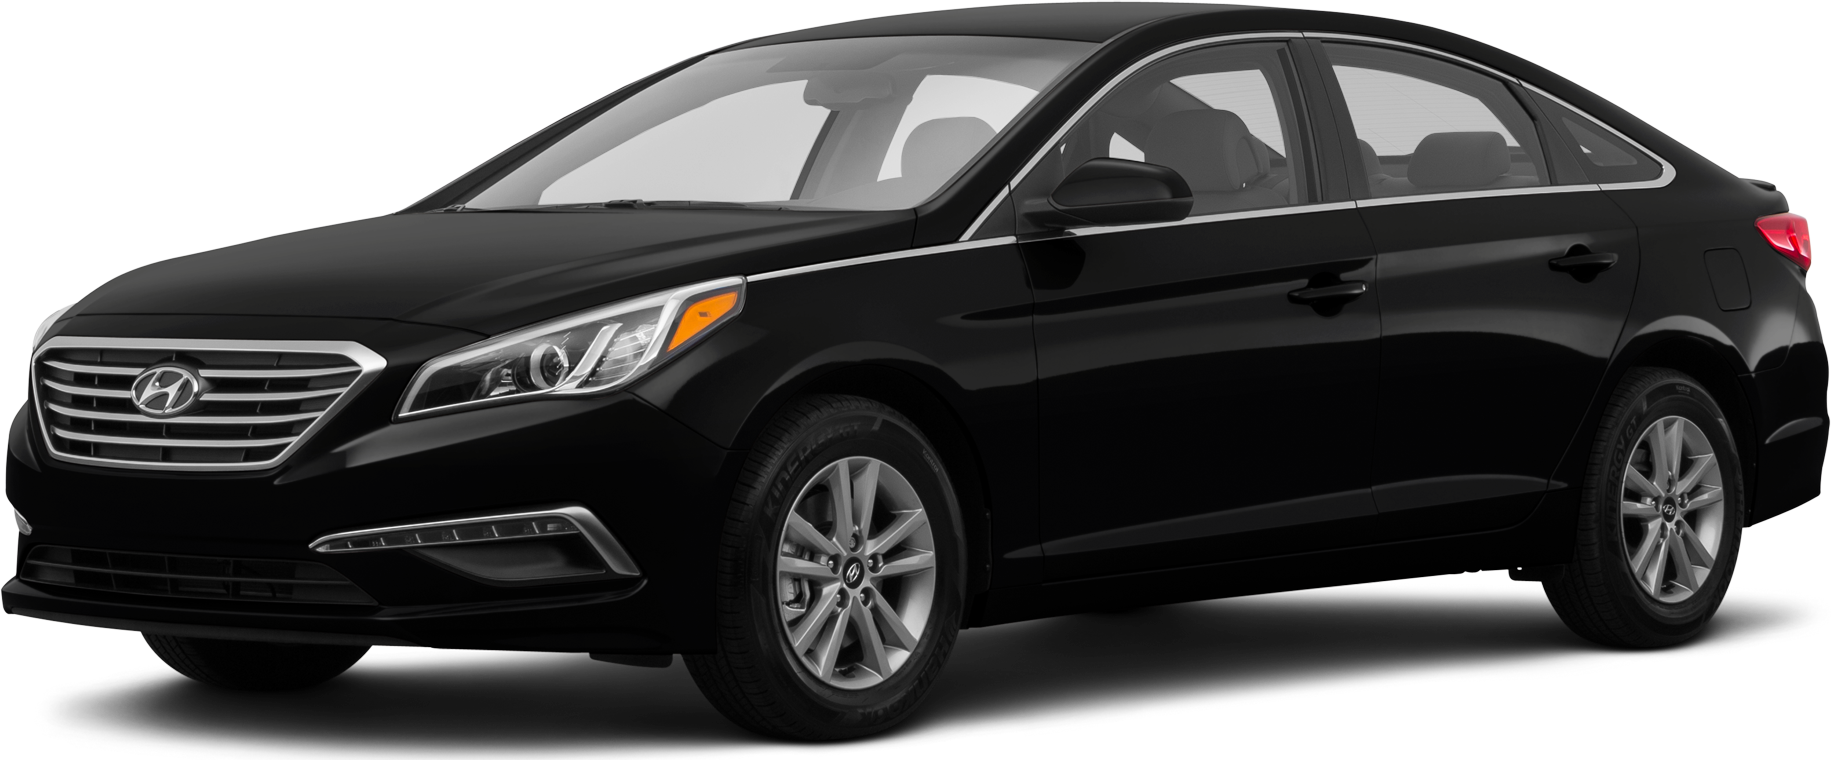 2015 Hyundai Sonata Price, Value, Ratings & Reviews